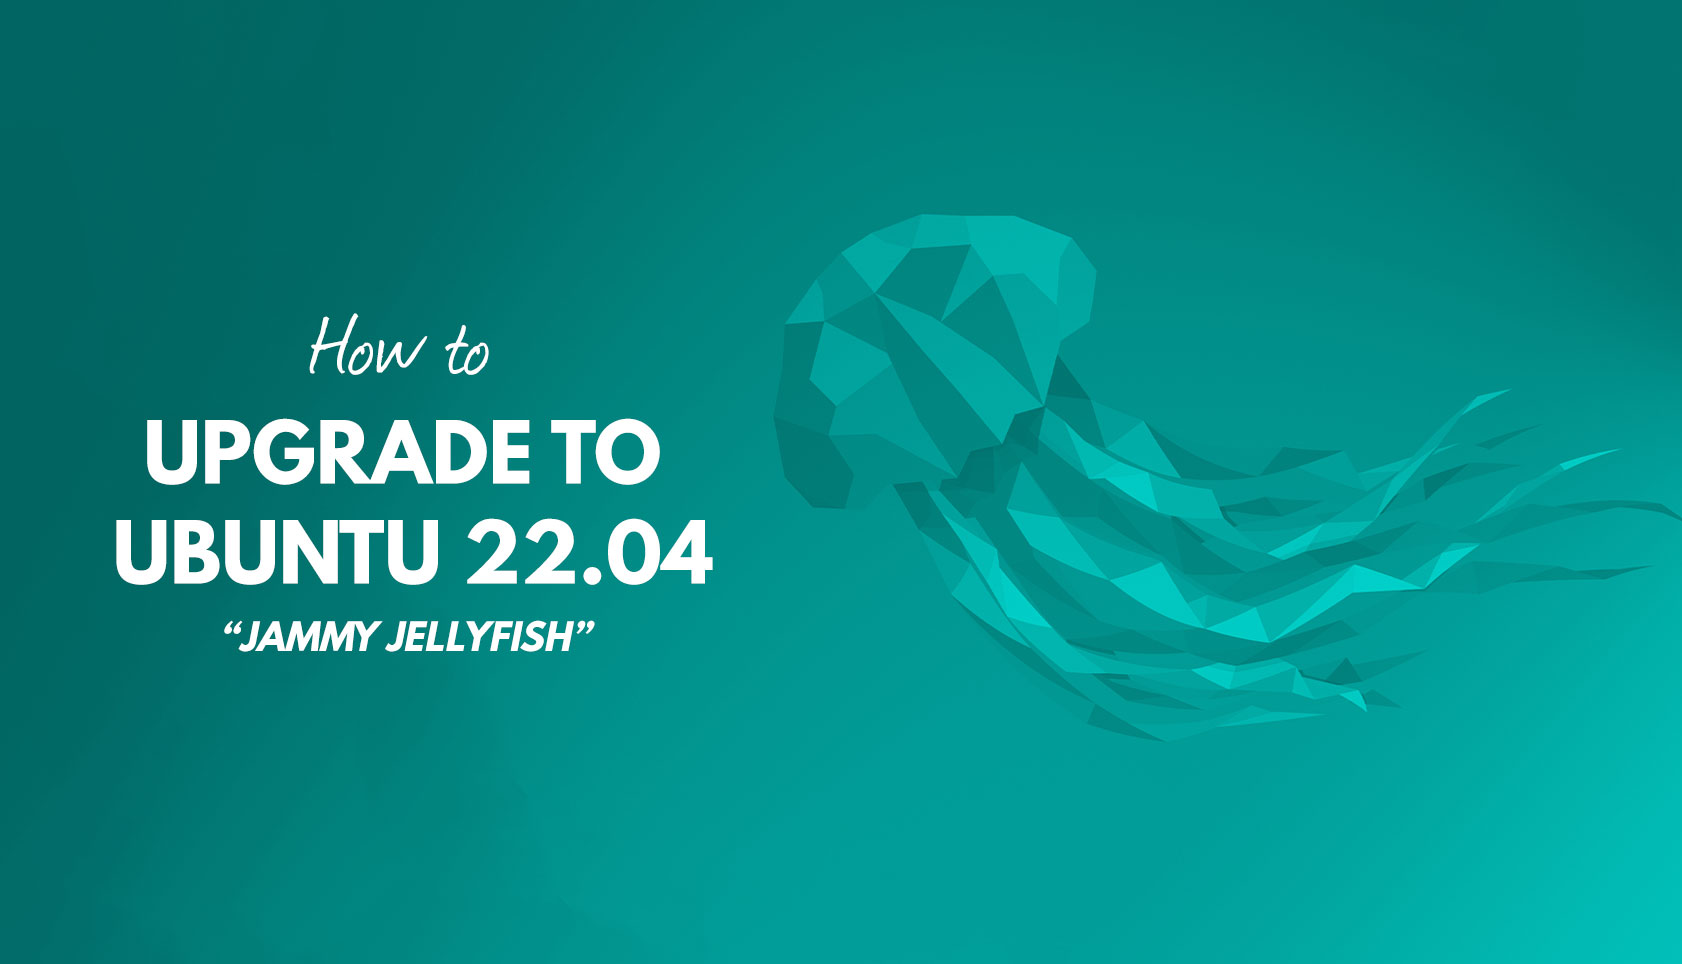 how to upgrade to ubuntu 22.04 LTS jammy jellyfish